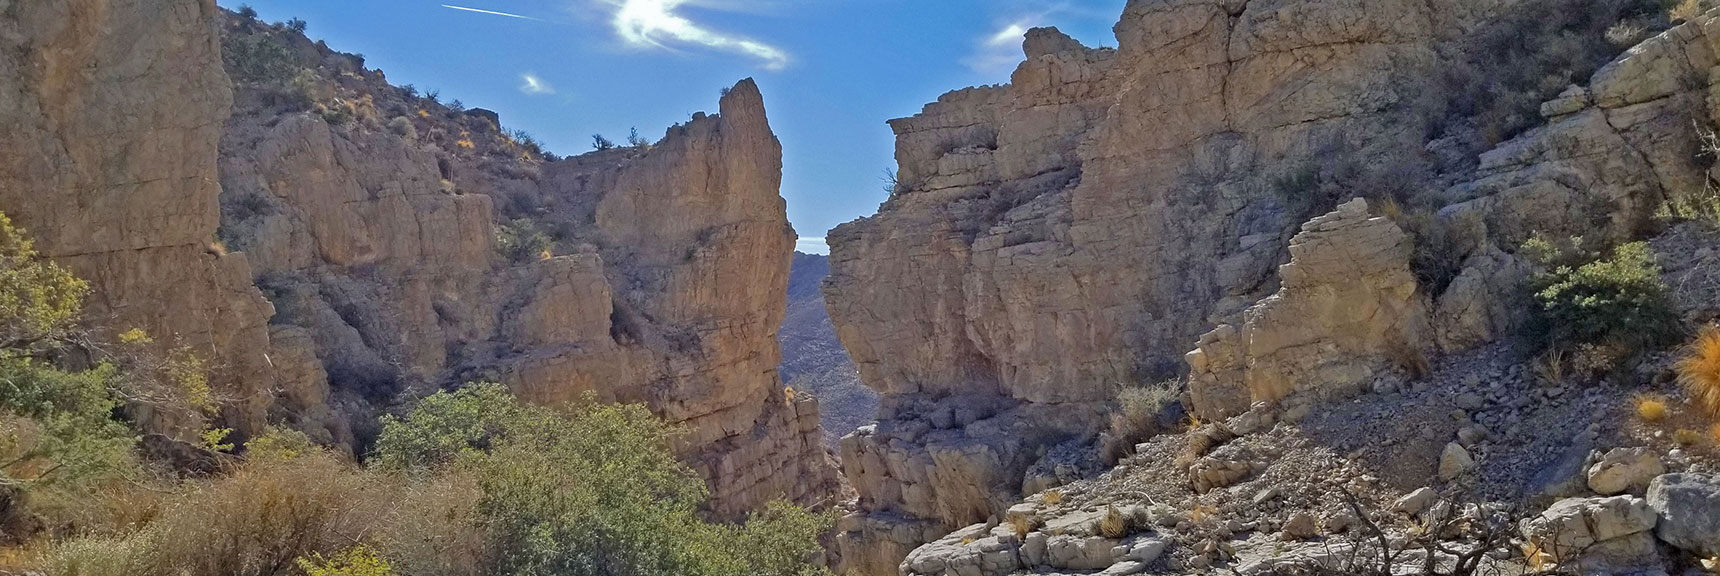 High, Narrow Canyon Walls Have Their Own Beauty | Kraft Mountain, Gateway Canyon Loop, Calico Basin, Nevada